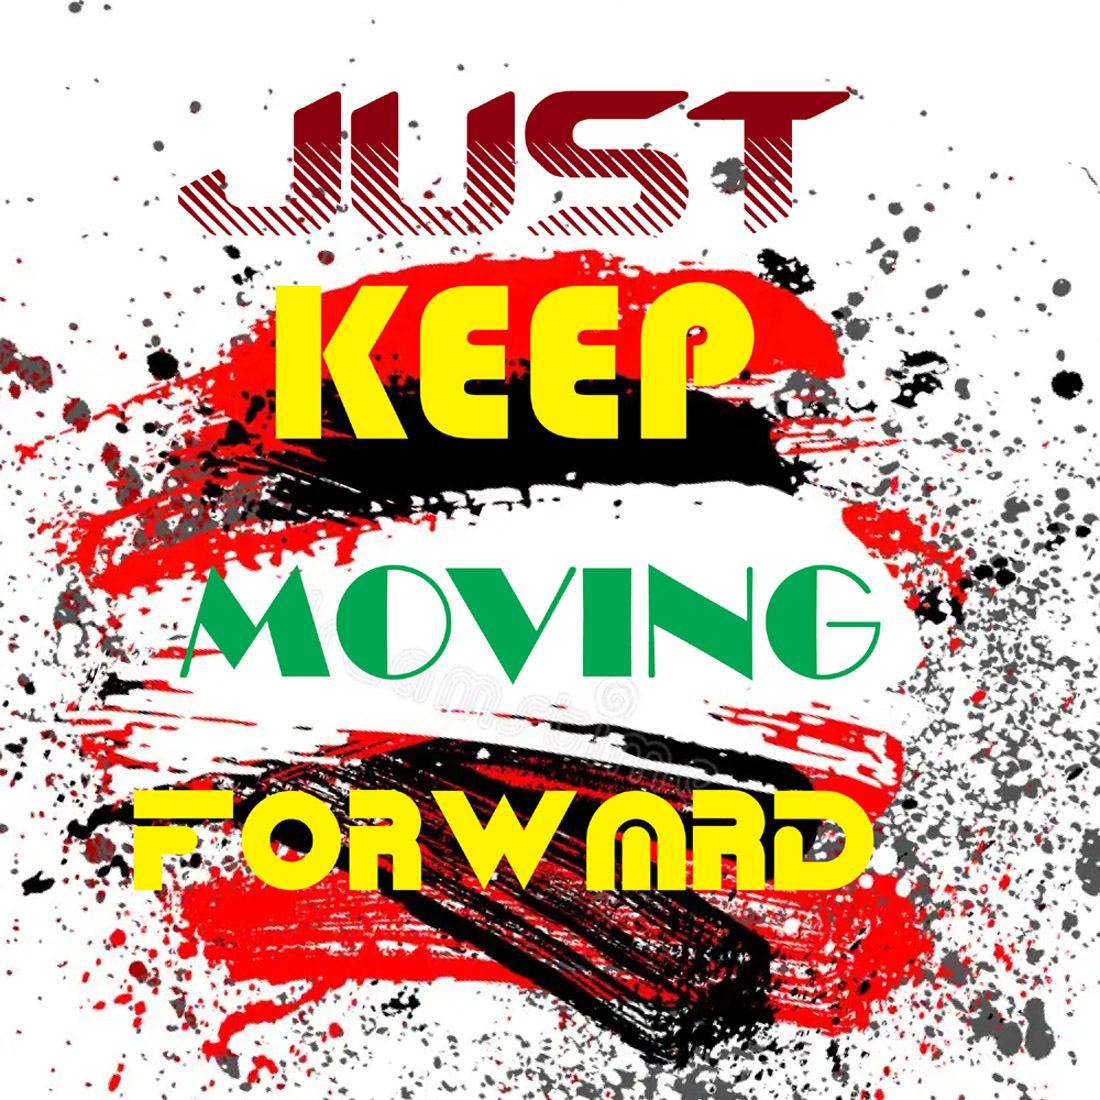 keep moving forward cover photo